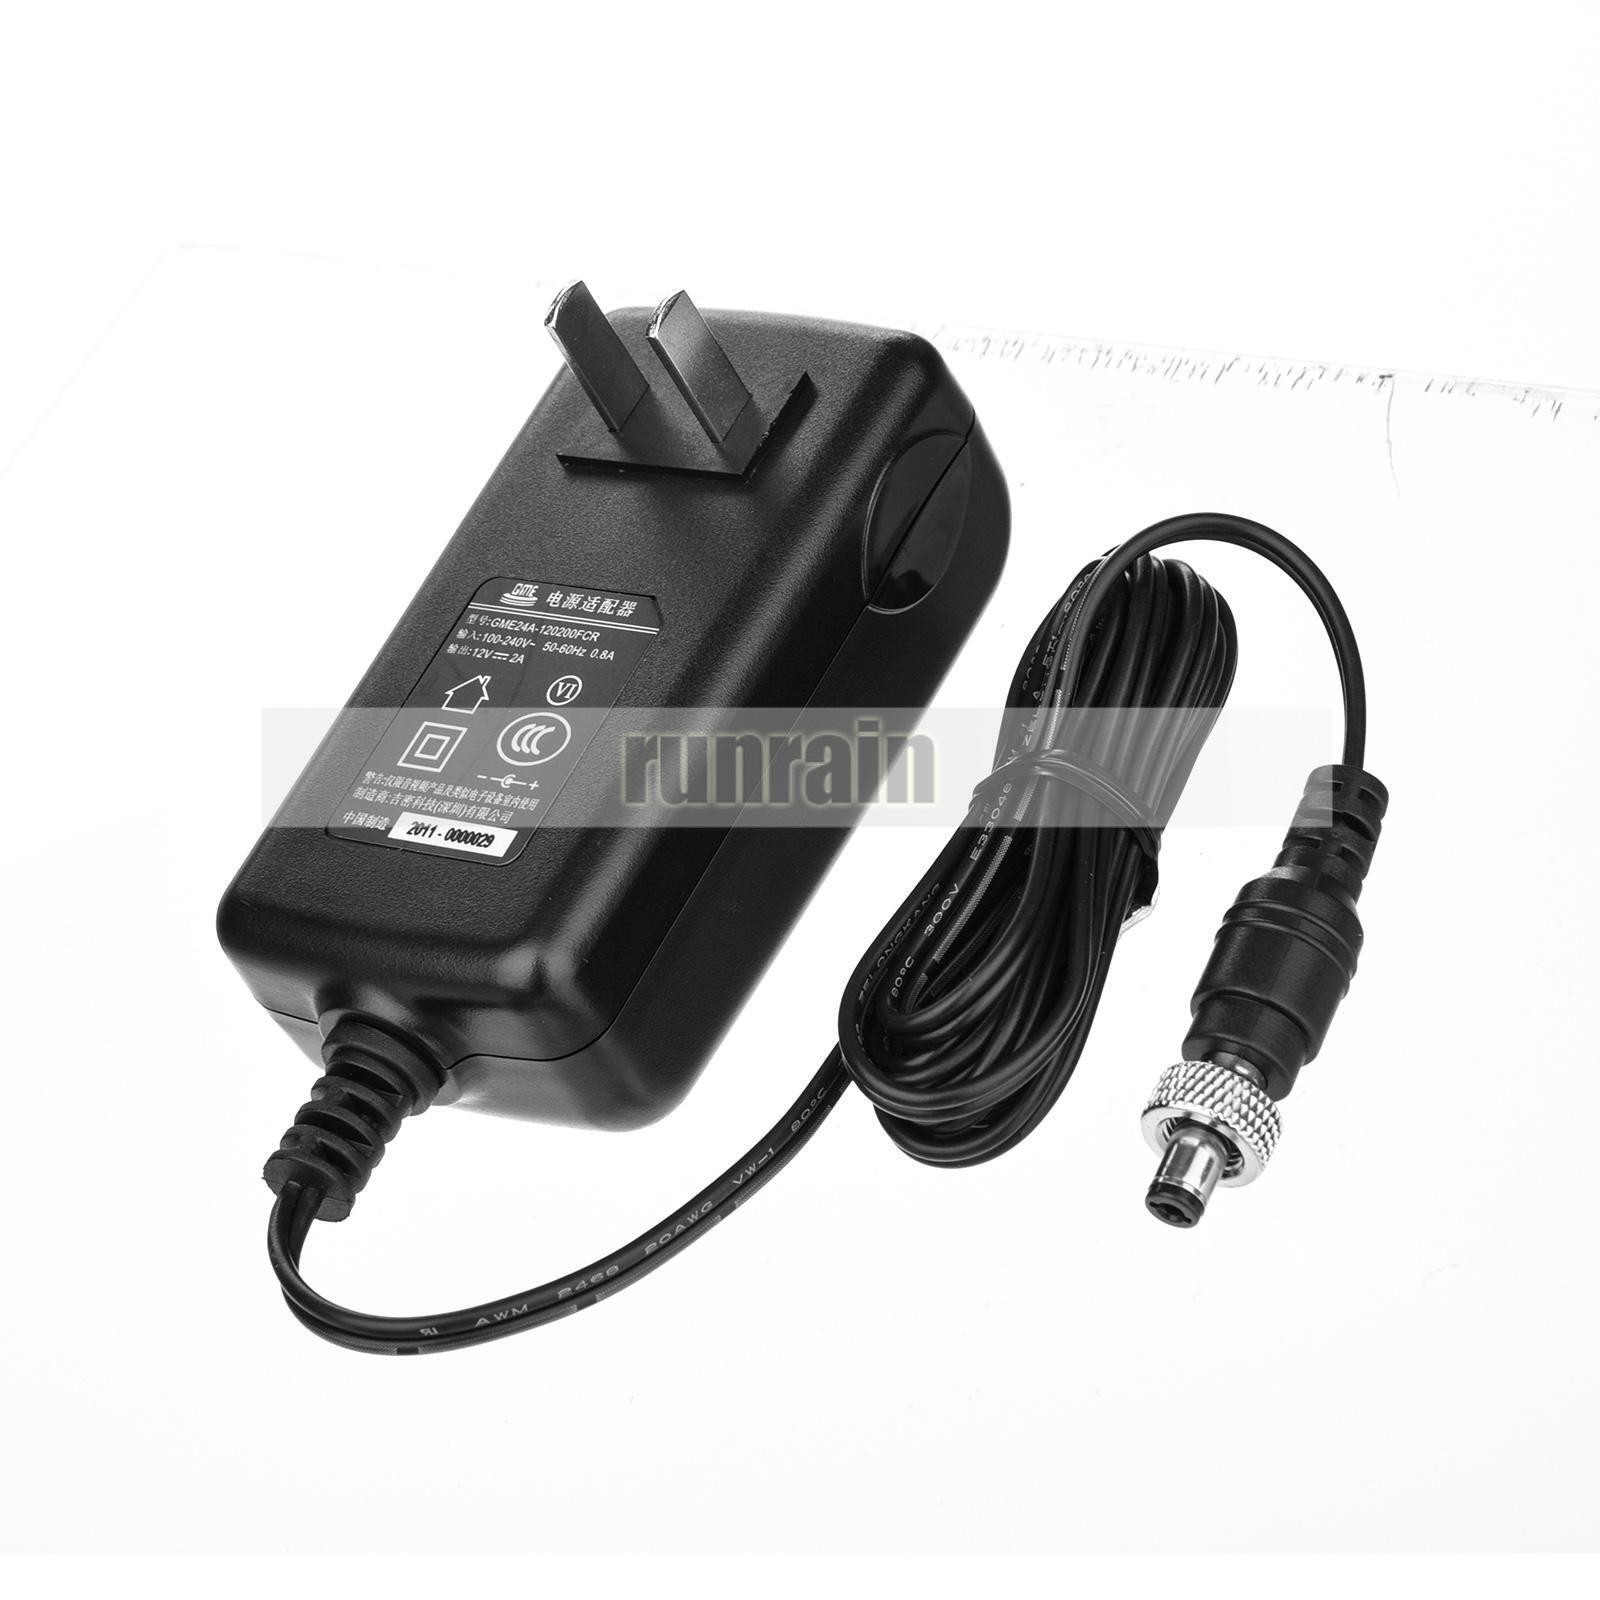 Mackie ProFX6v3 Profx10v3 Analog Mixer Power Supply AC Adapter 12V 2A Brand Mackie Color Black Compatible Brand for Mac